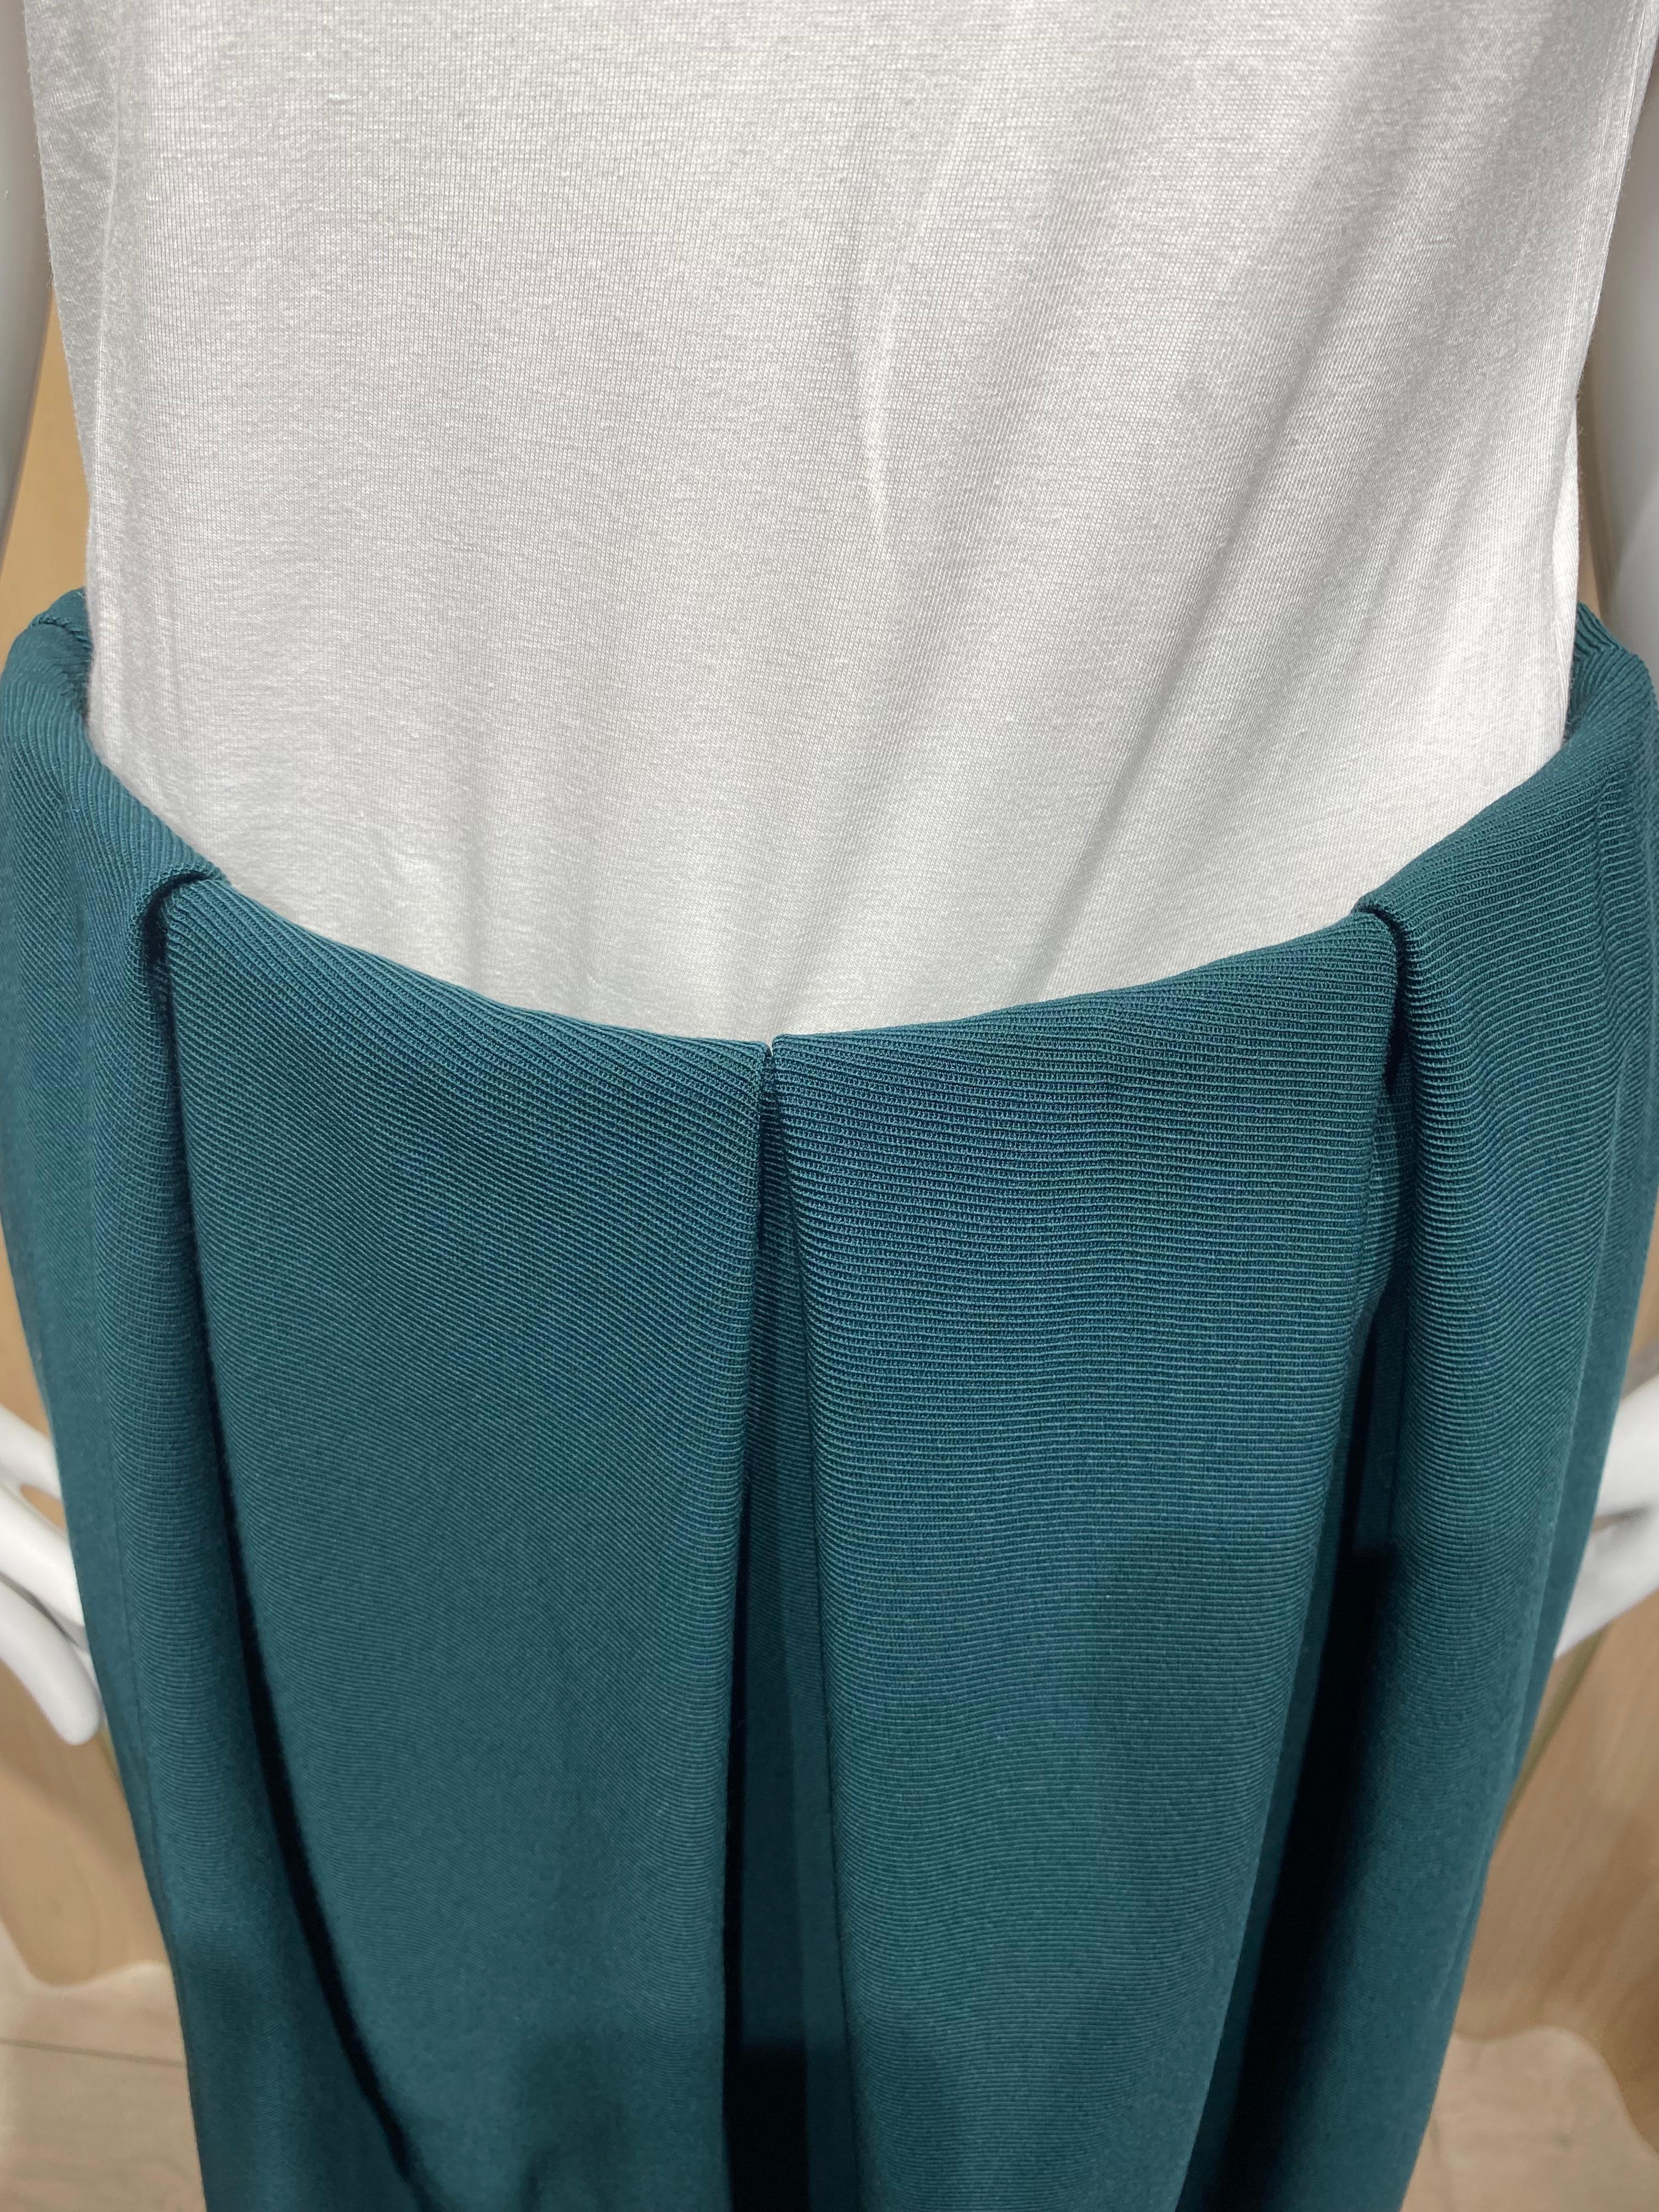 Jil Sander By Raf Simons Green Maxi Skirt For Sale 2